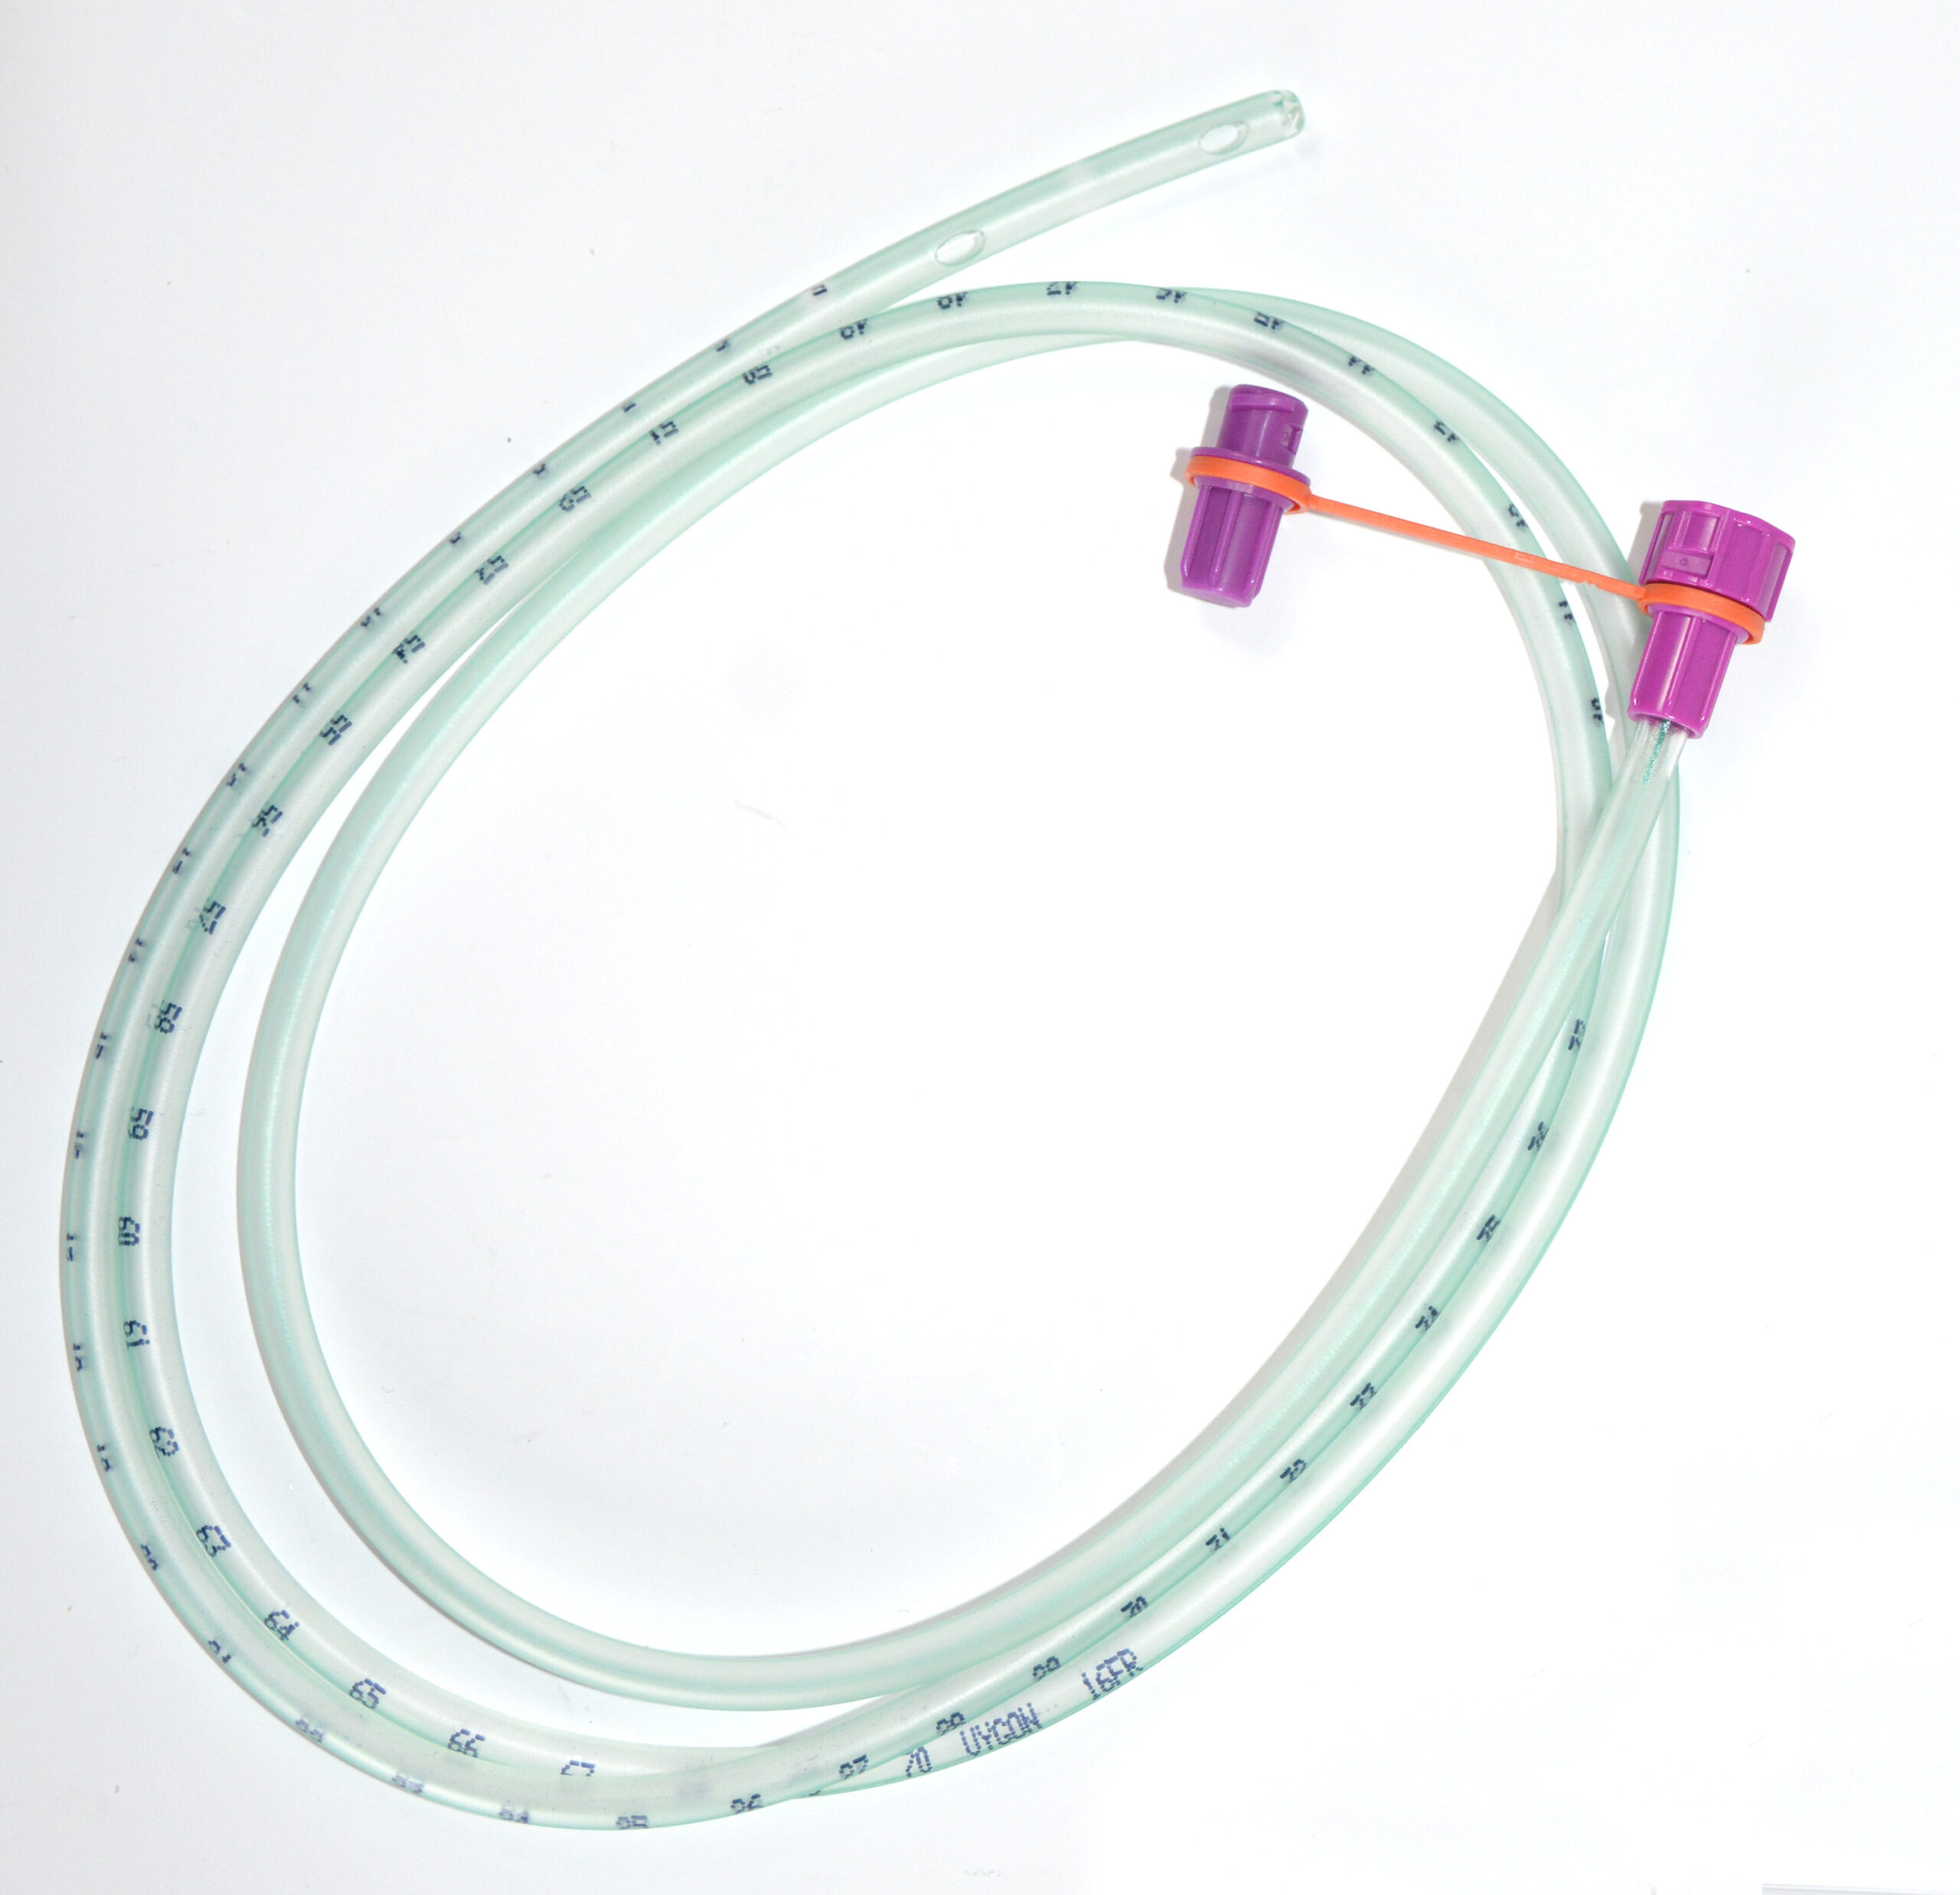 Nutrifit enteral feeding tube in PVC